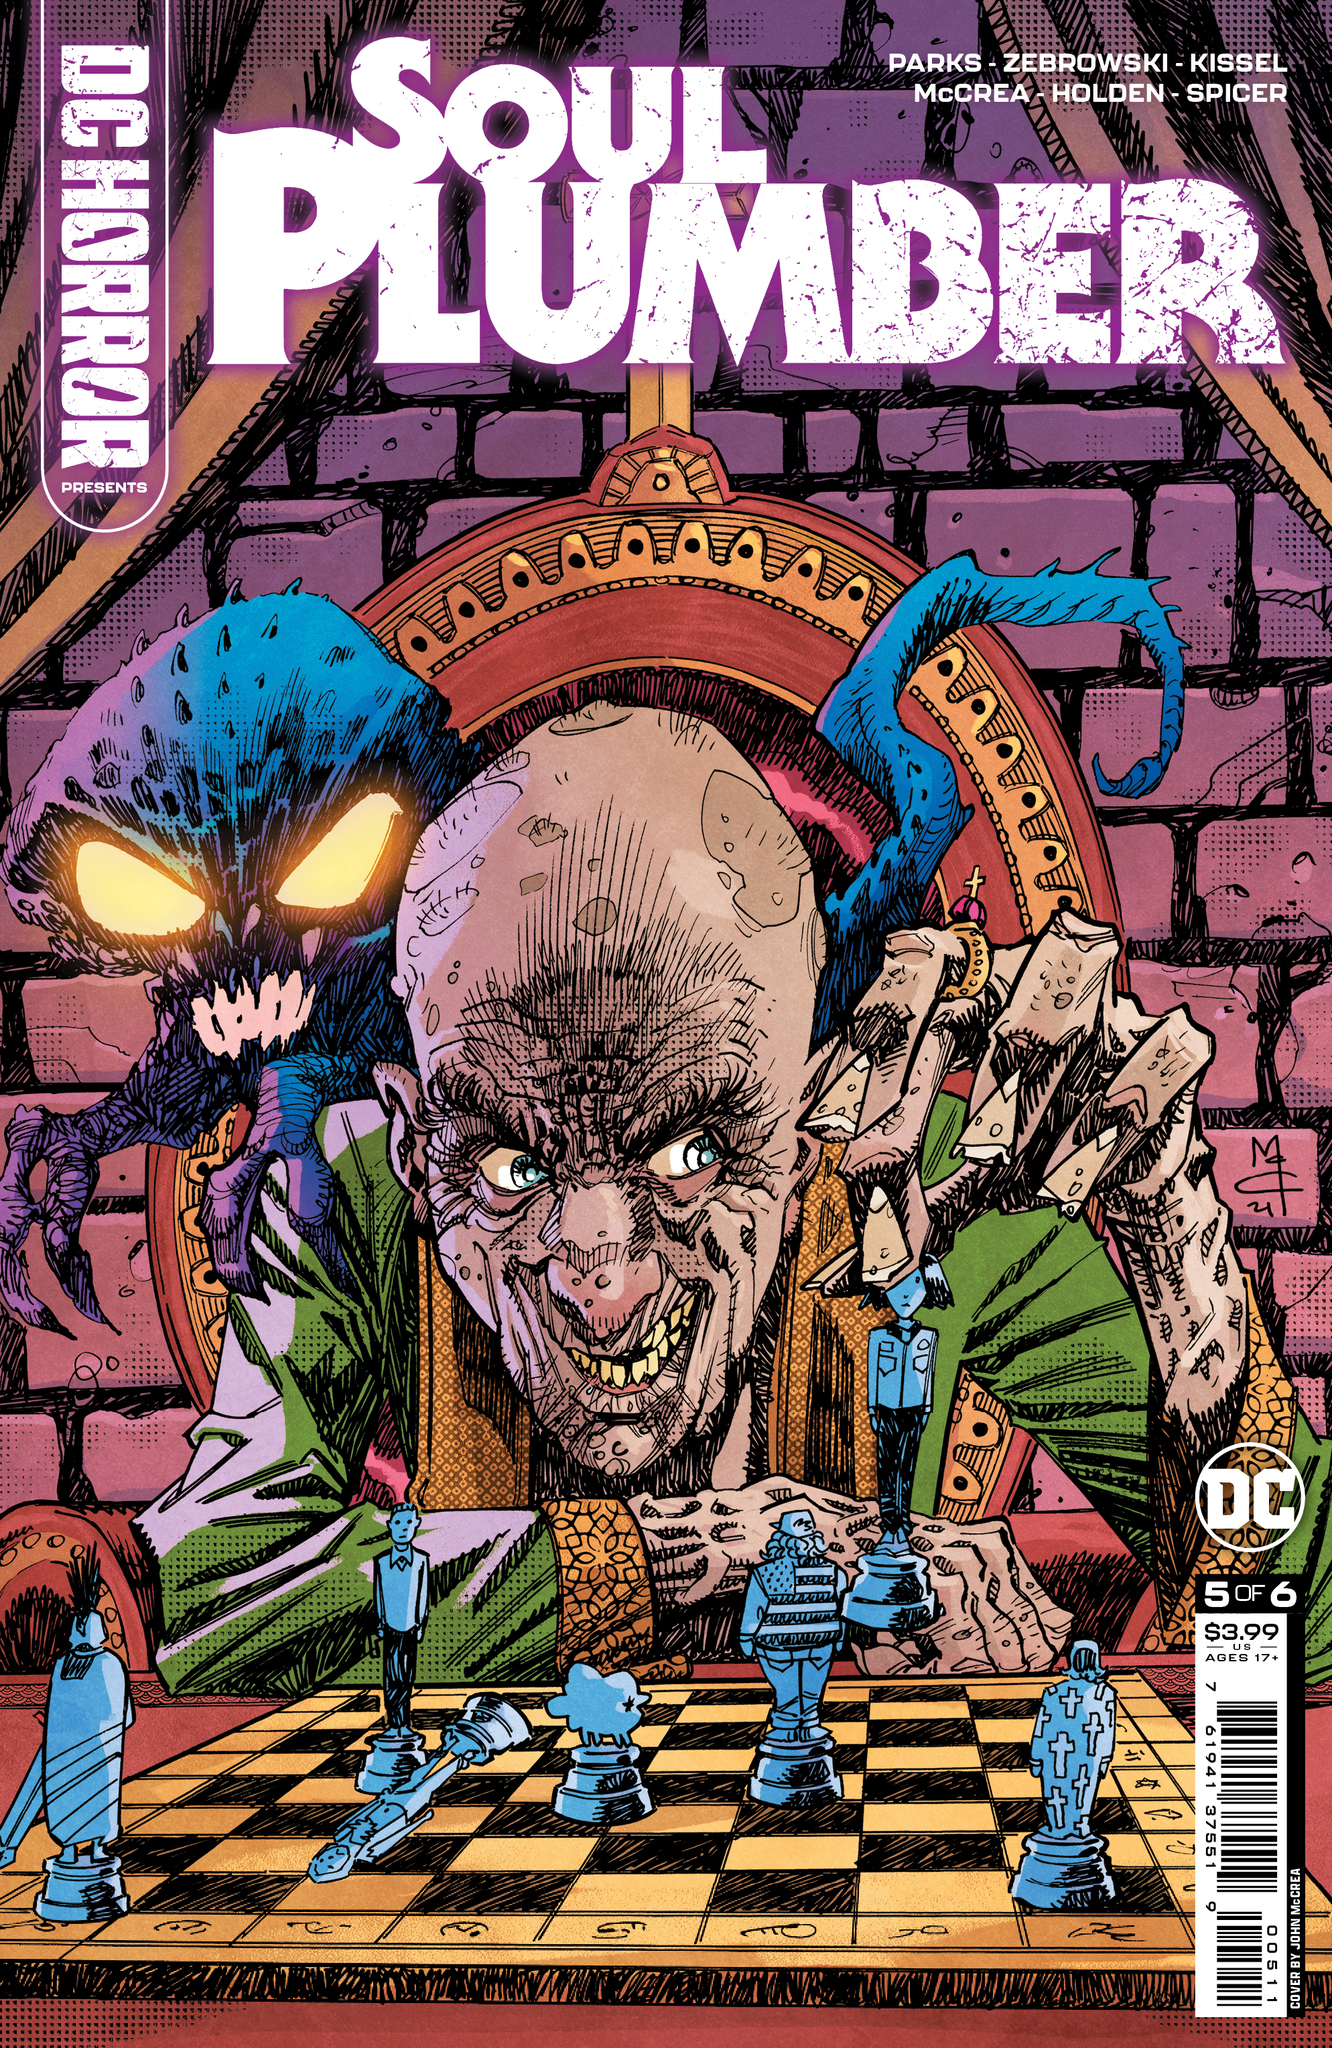 DC Horror Presents Soul Plumber #5 Cover A John McCrea (Mature) (Of 6)